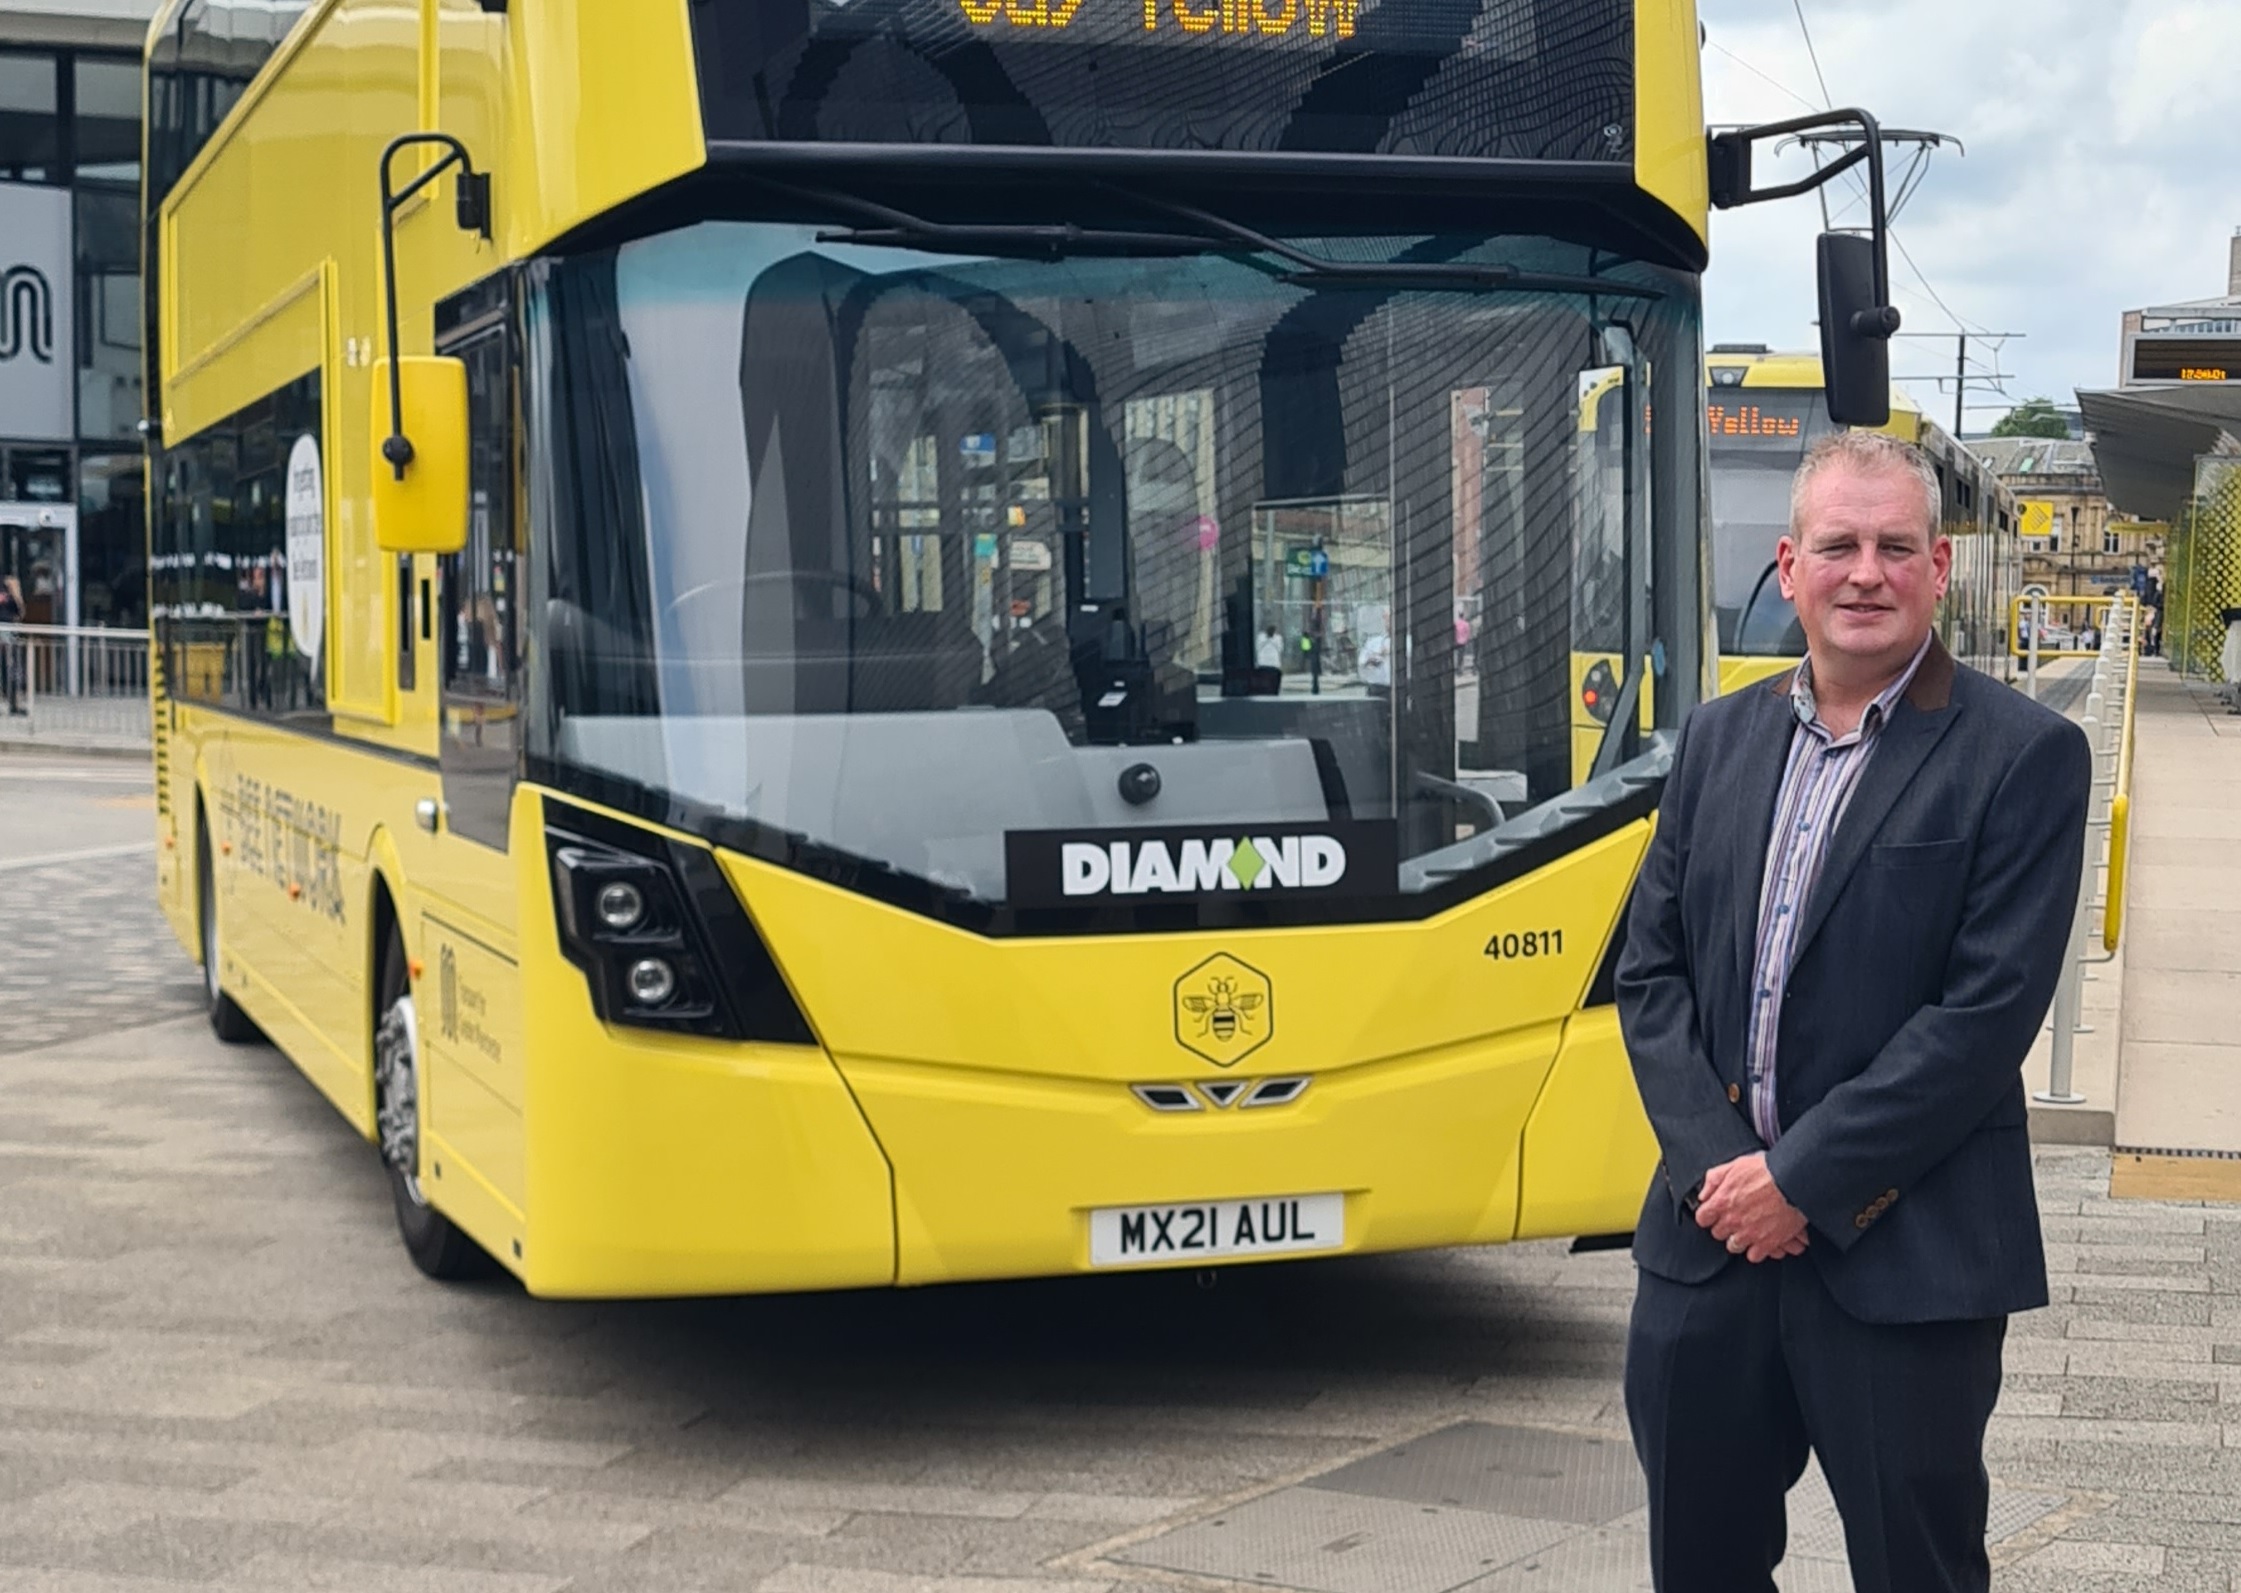 Rotala PLC Managing Director of Diamond Bus North West and Preston Bus Matt Rawlinson